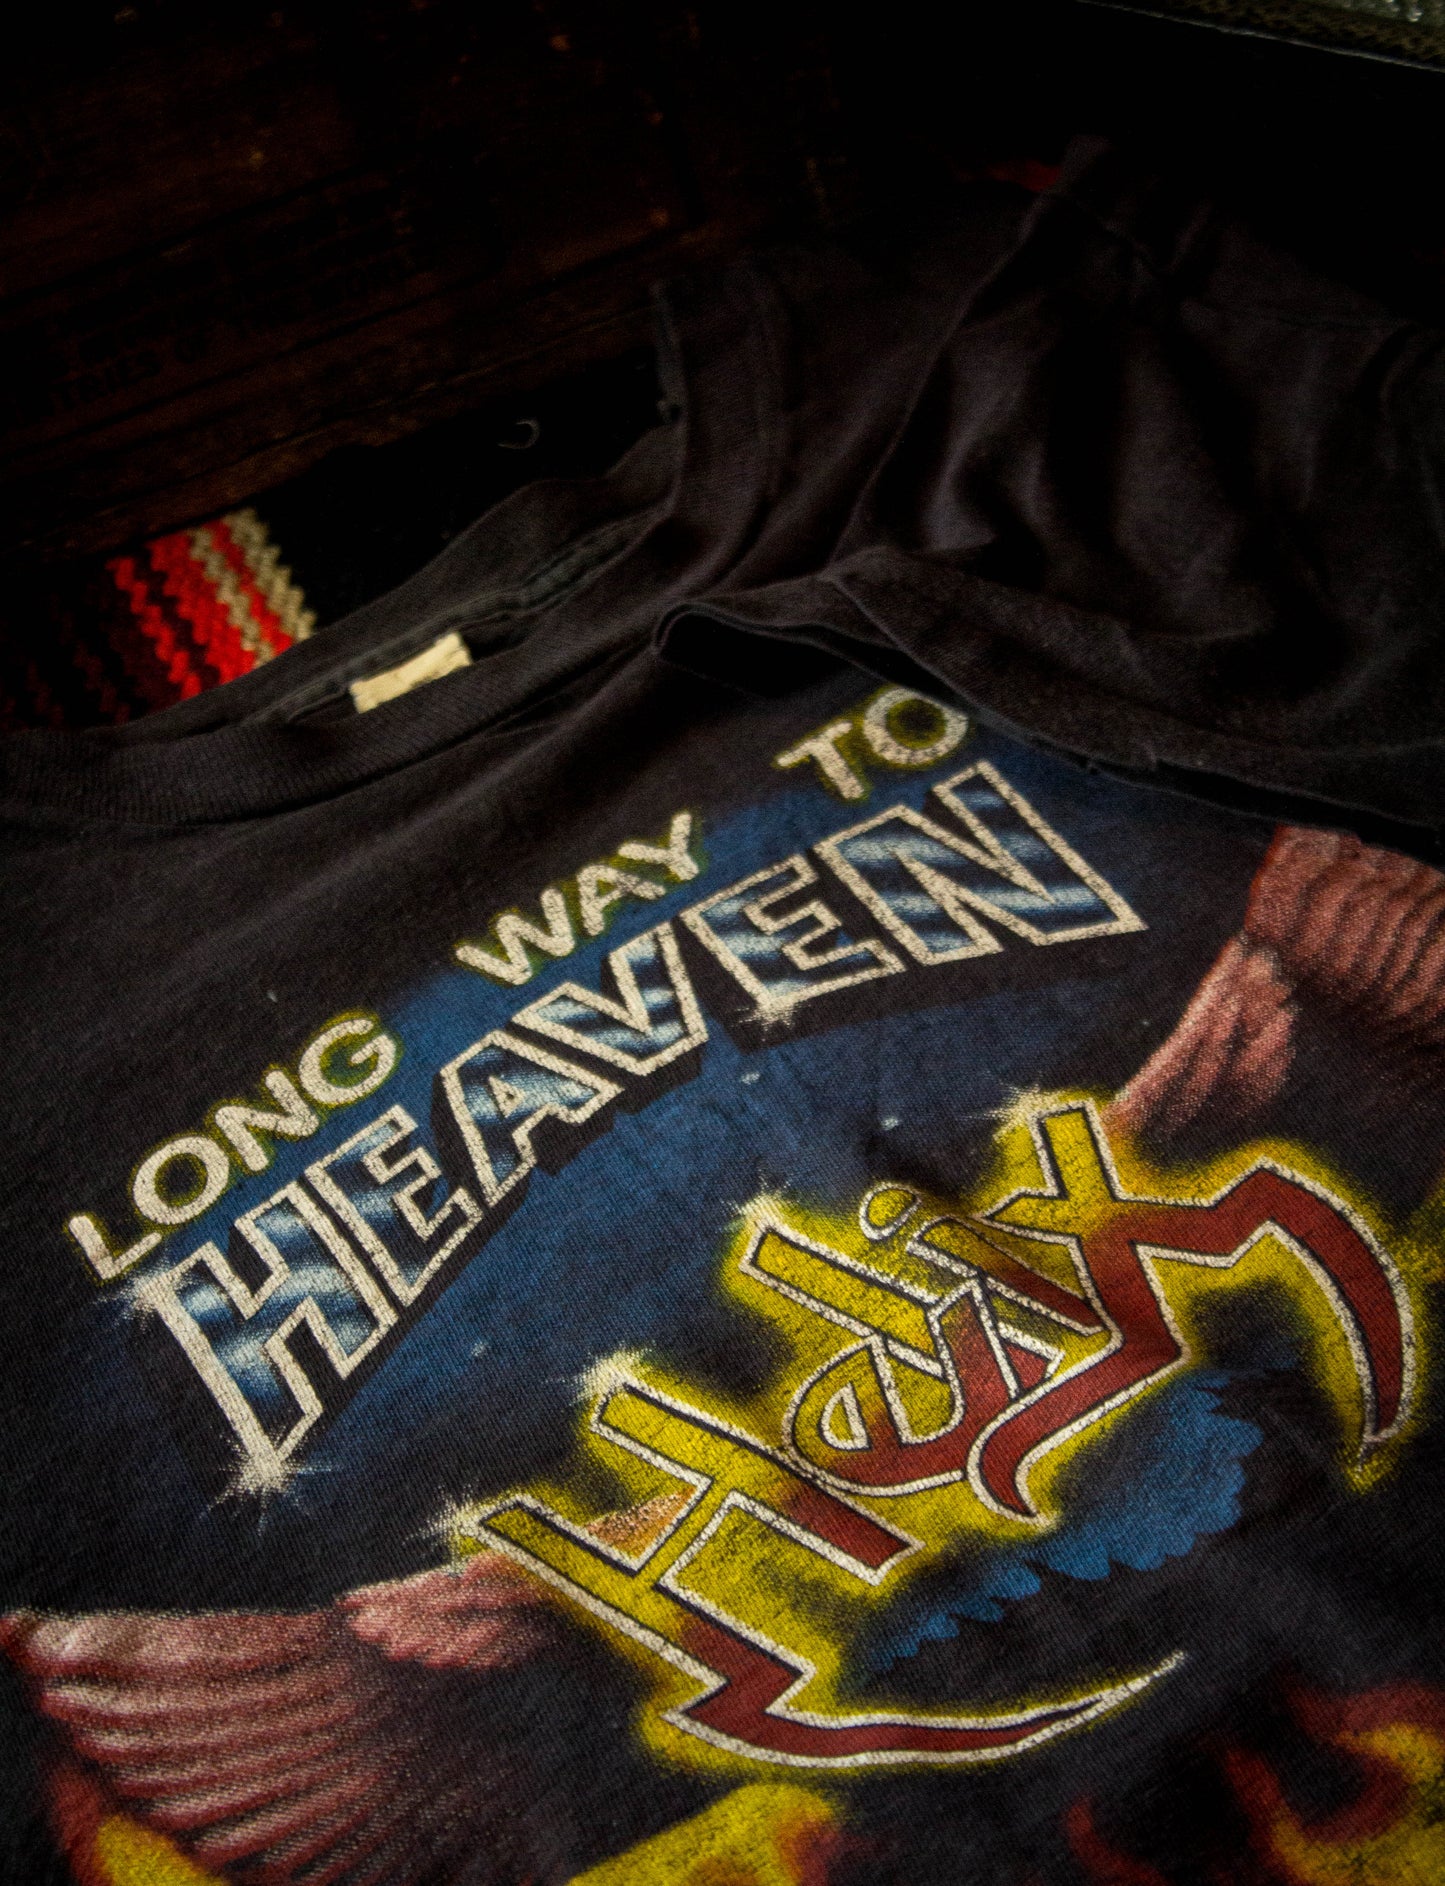 Vintage 1985 Helix Long Way To Heaven Concert T Shirt Medium